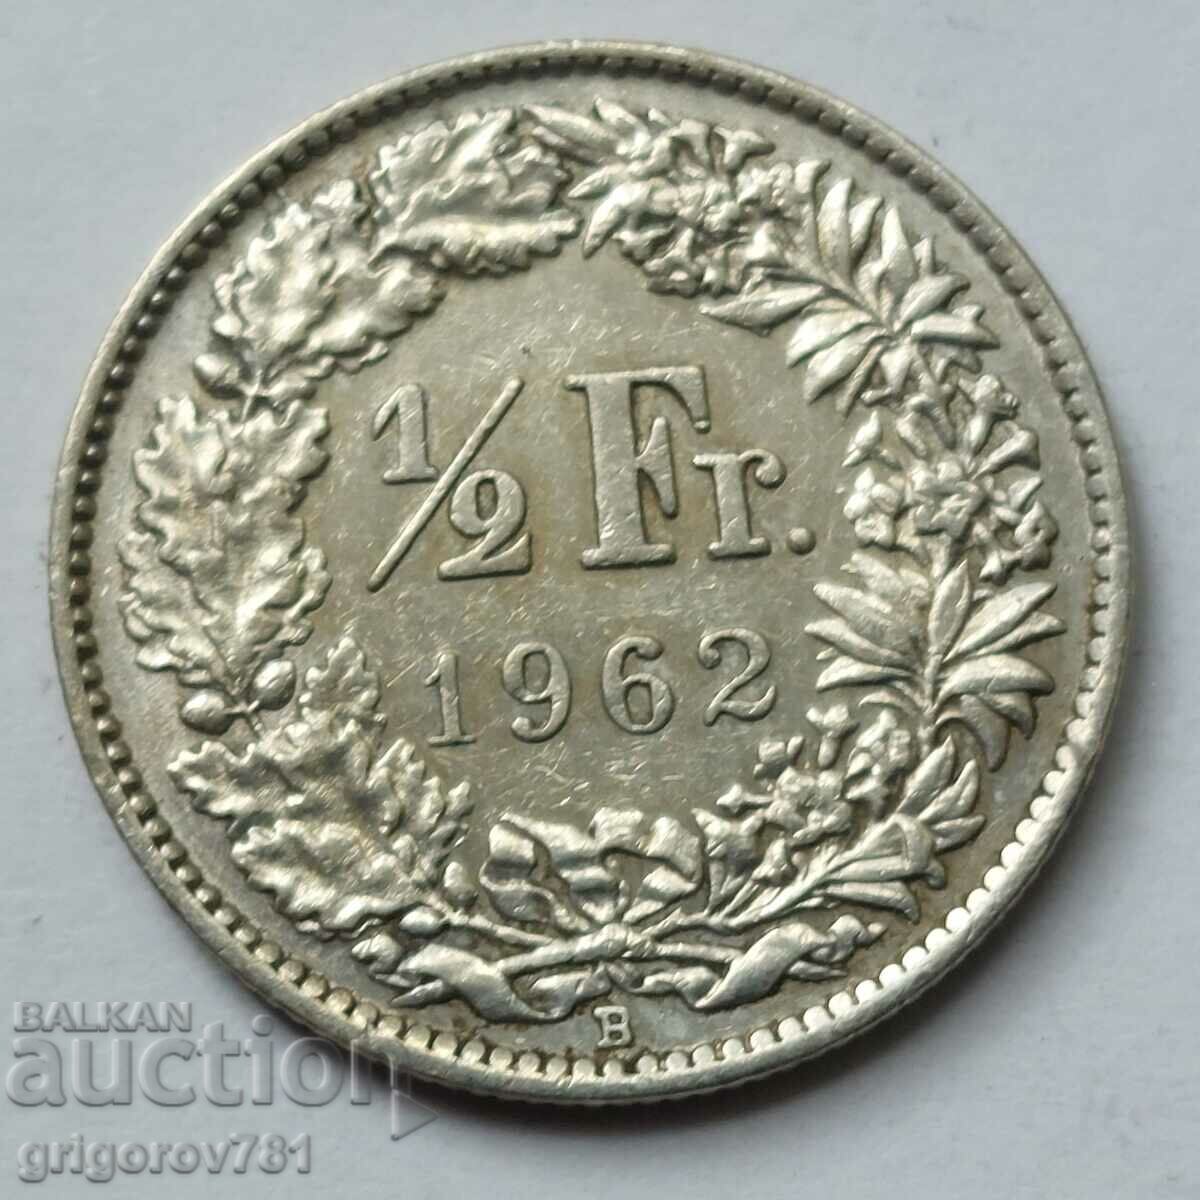 1/2 Franc Silver Switzerland 1962 B - Silver Coin #60